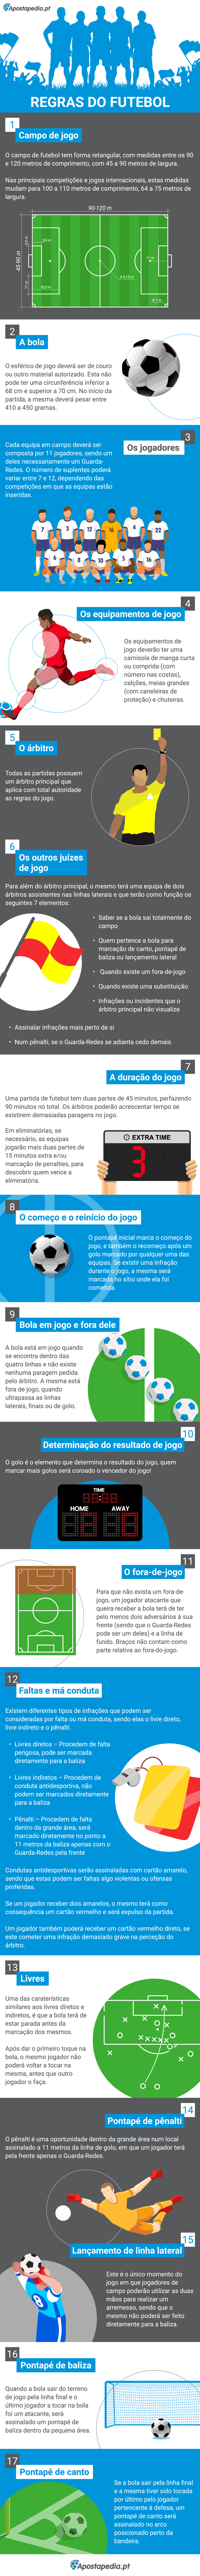 Lei do Futebol: Regra 8 ·